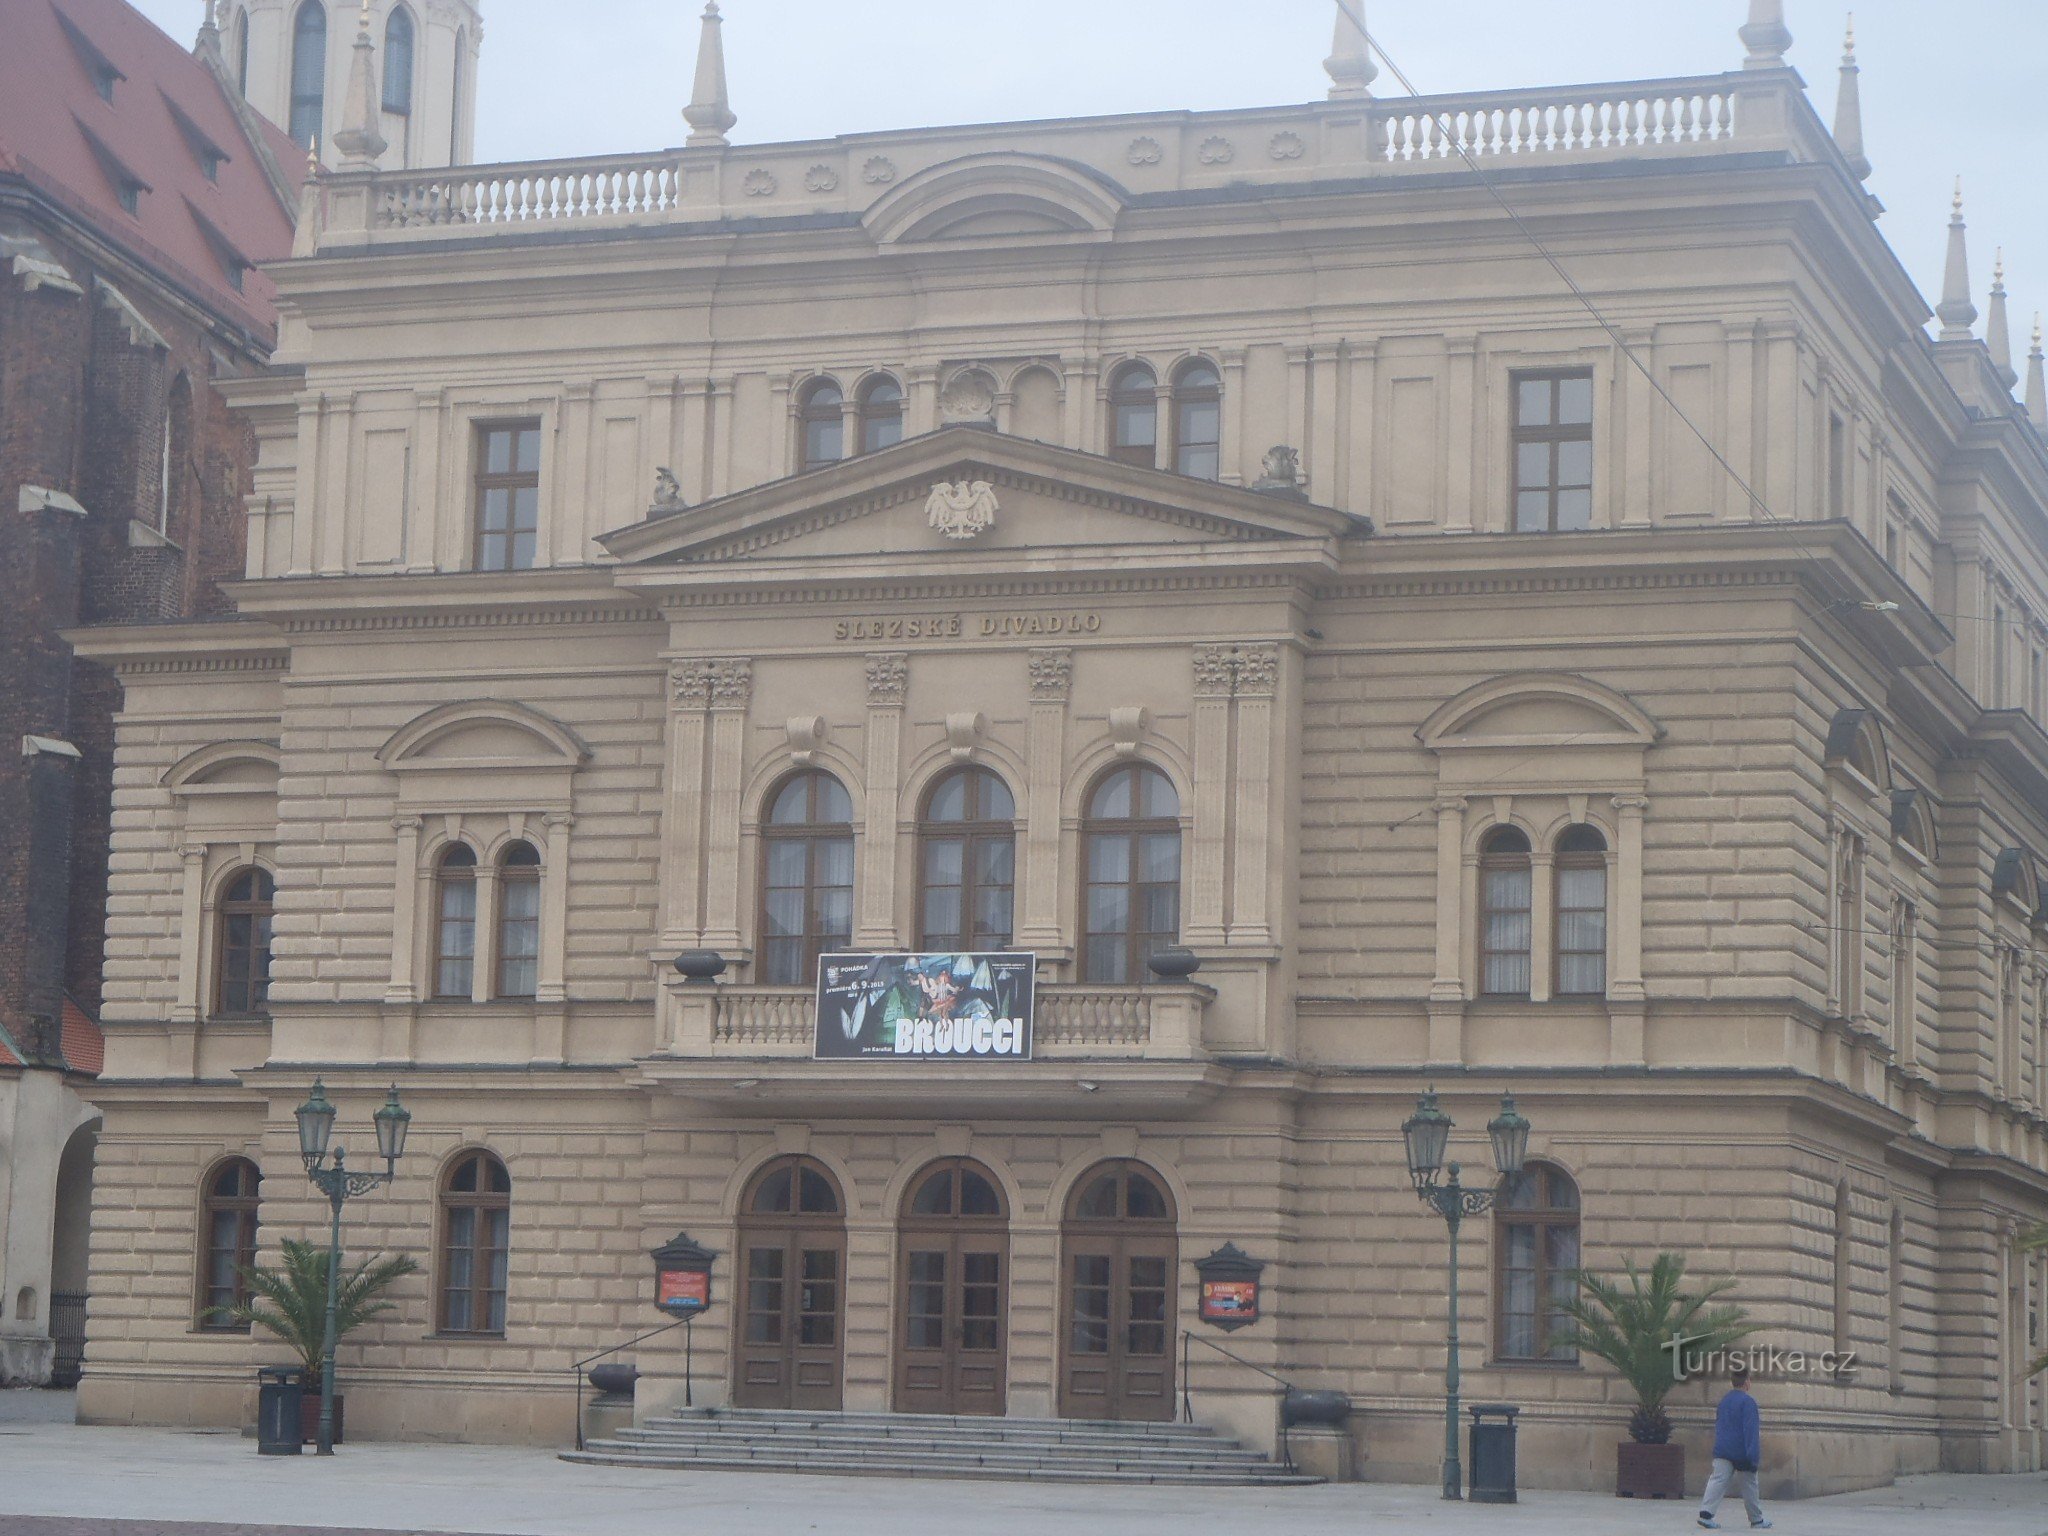 Silezisch Theater